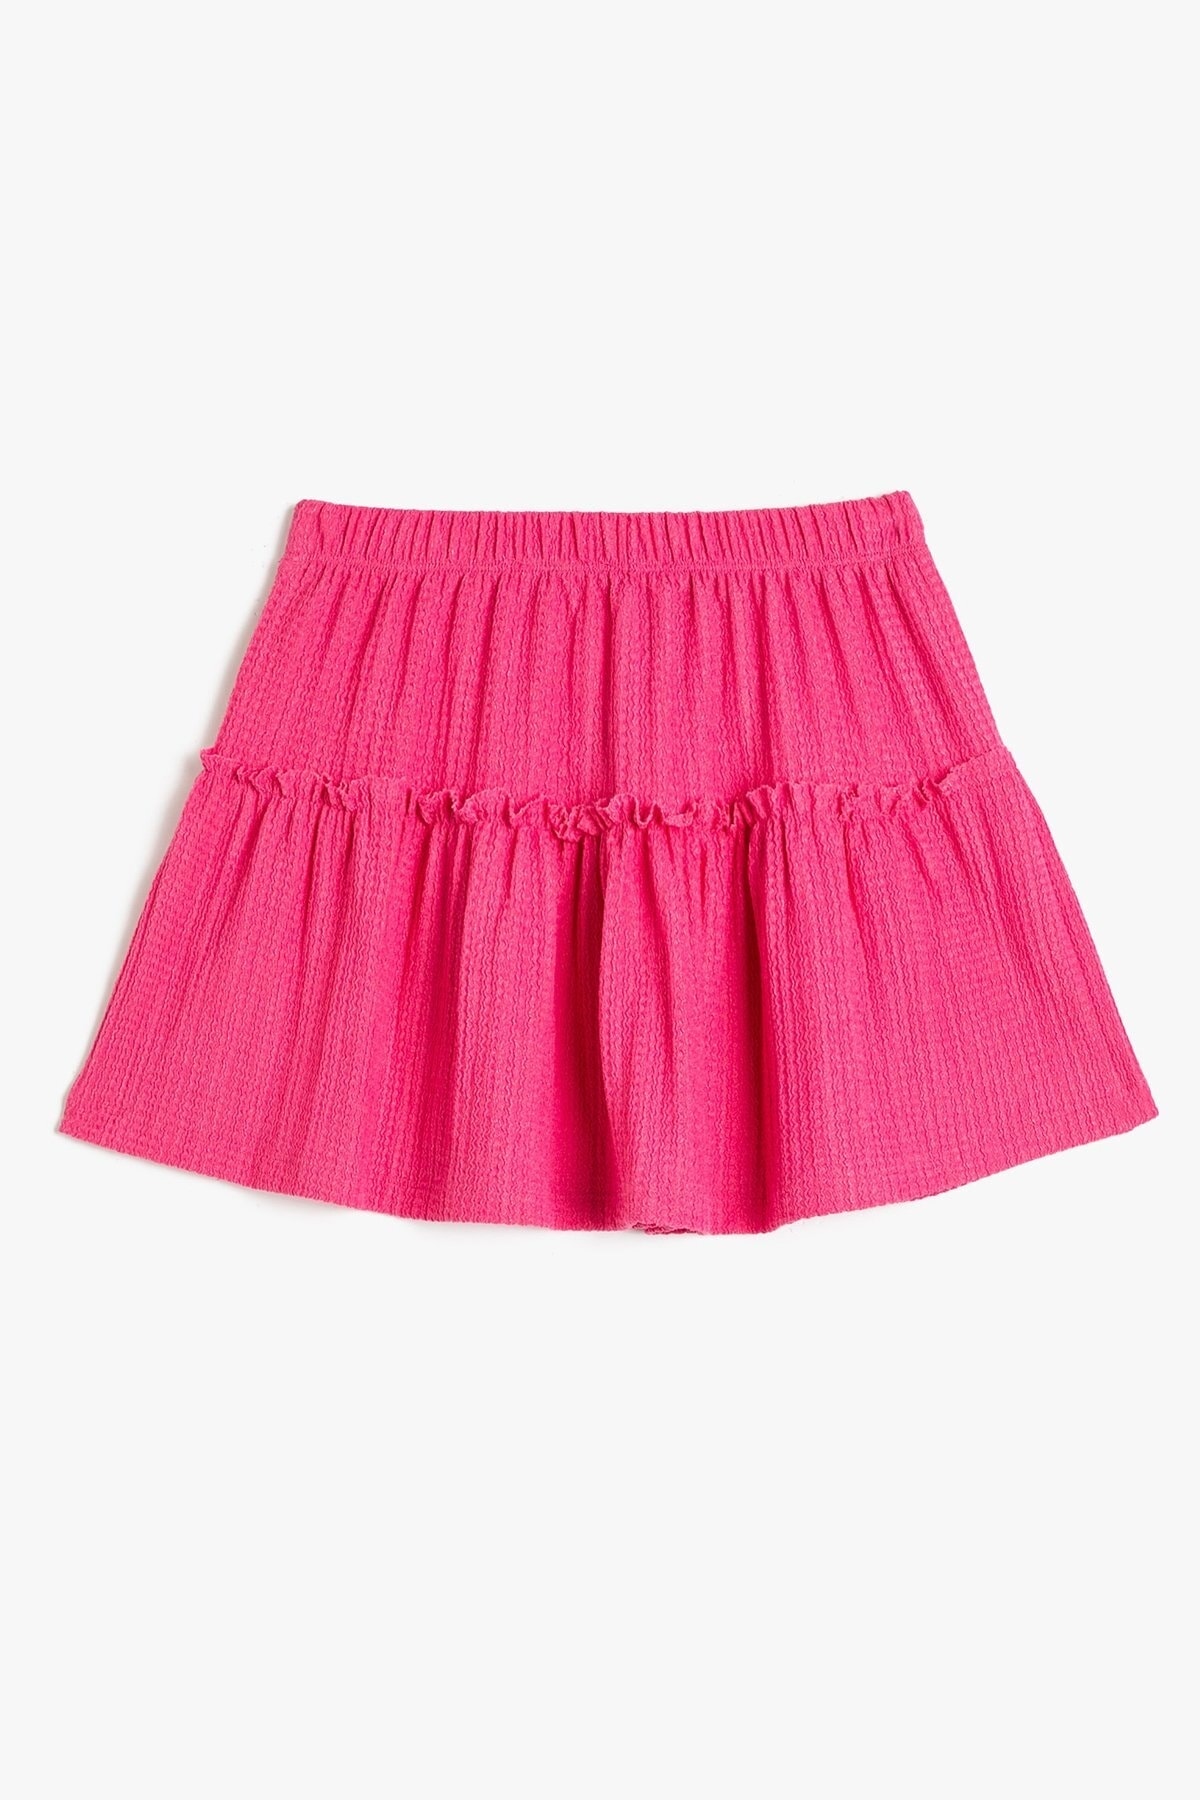 Koton Girl's Tiered Mini Skirt with Elastic Waist 3skg70021ak